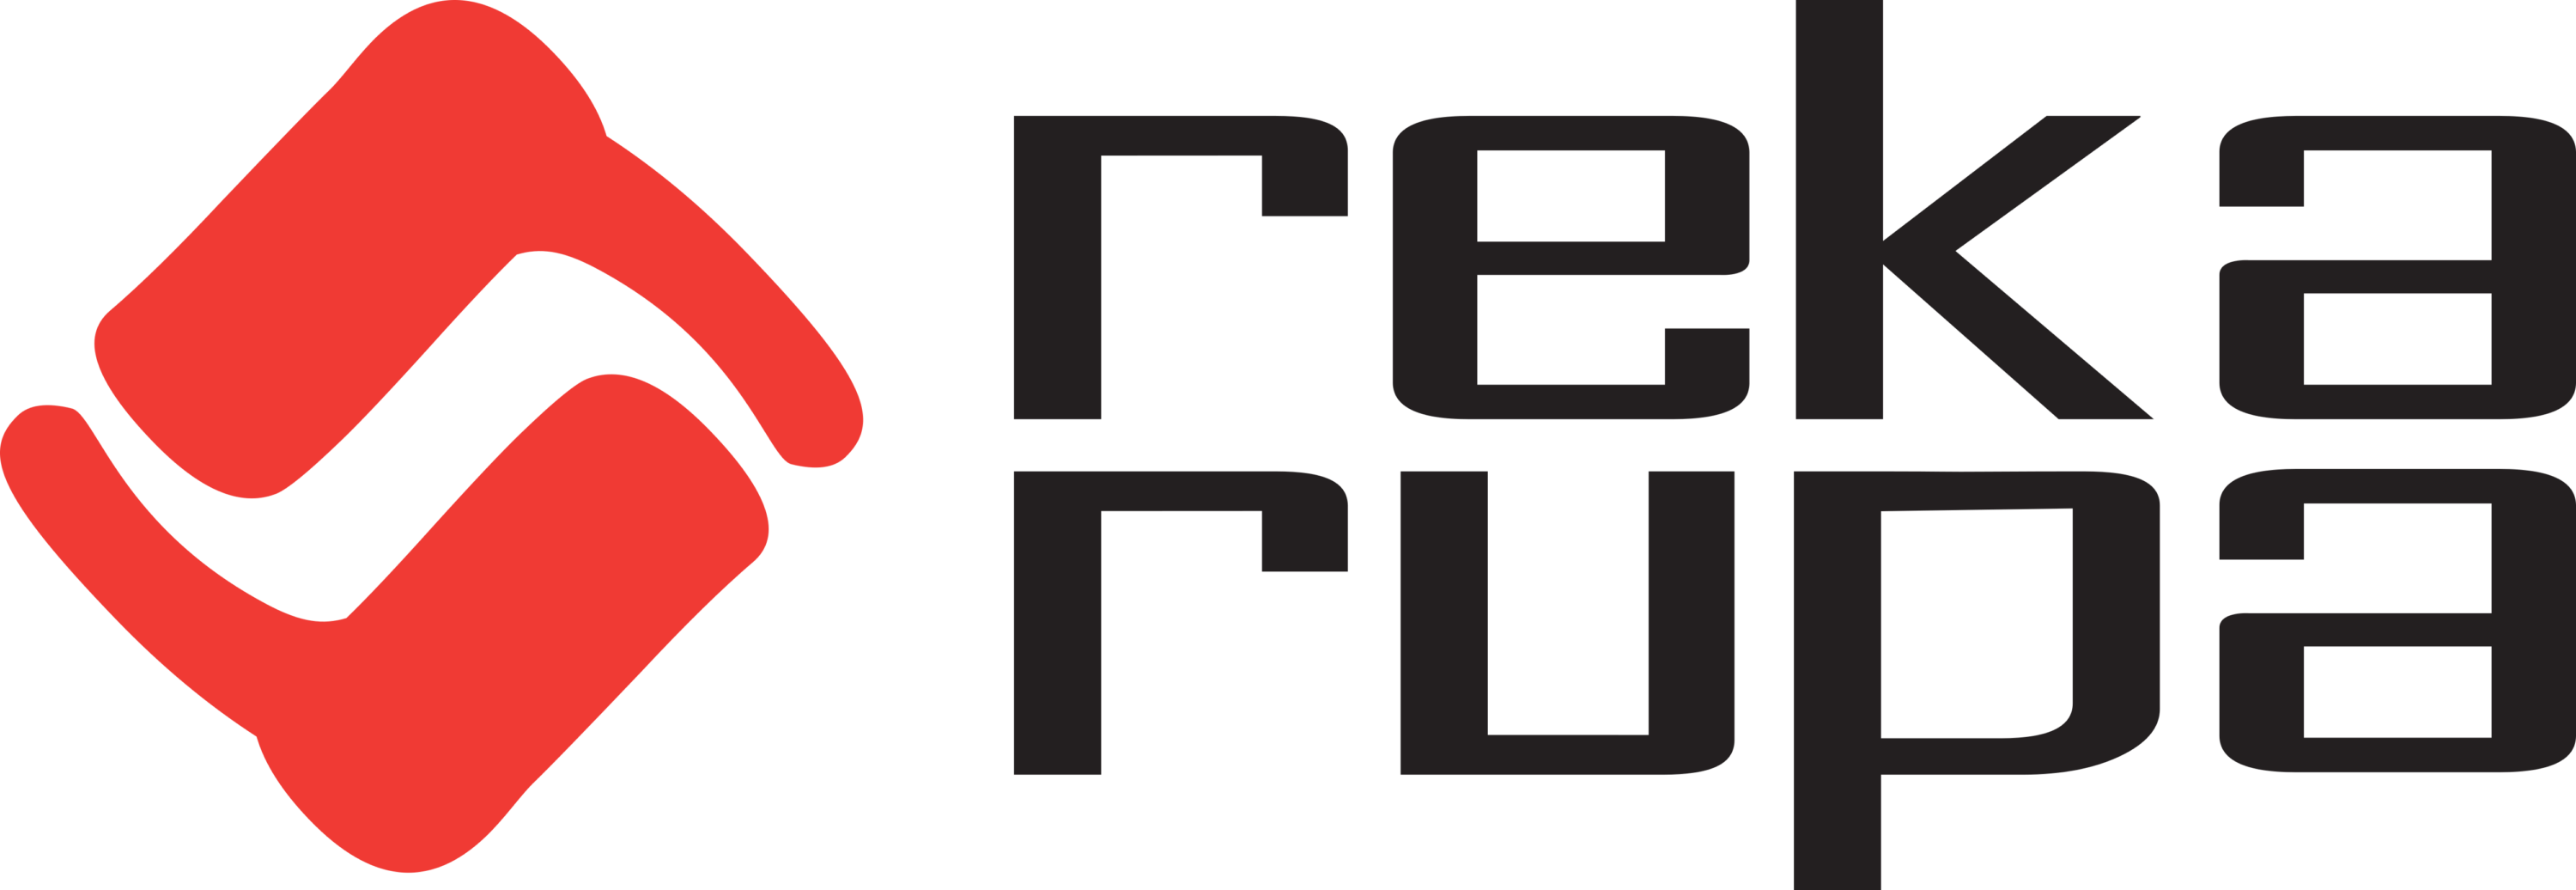 Rekarupa Logo